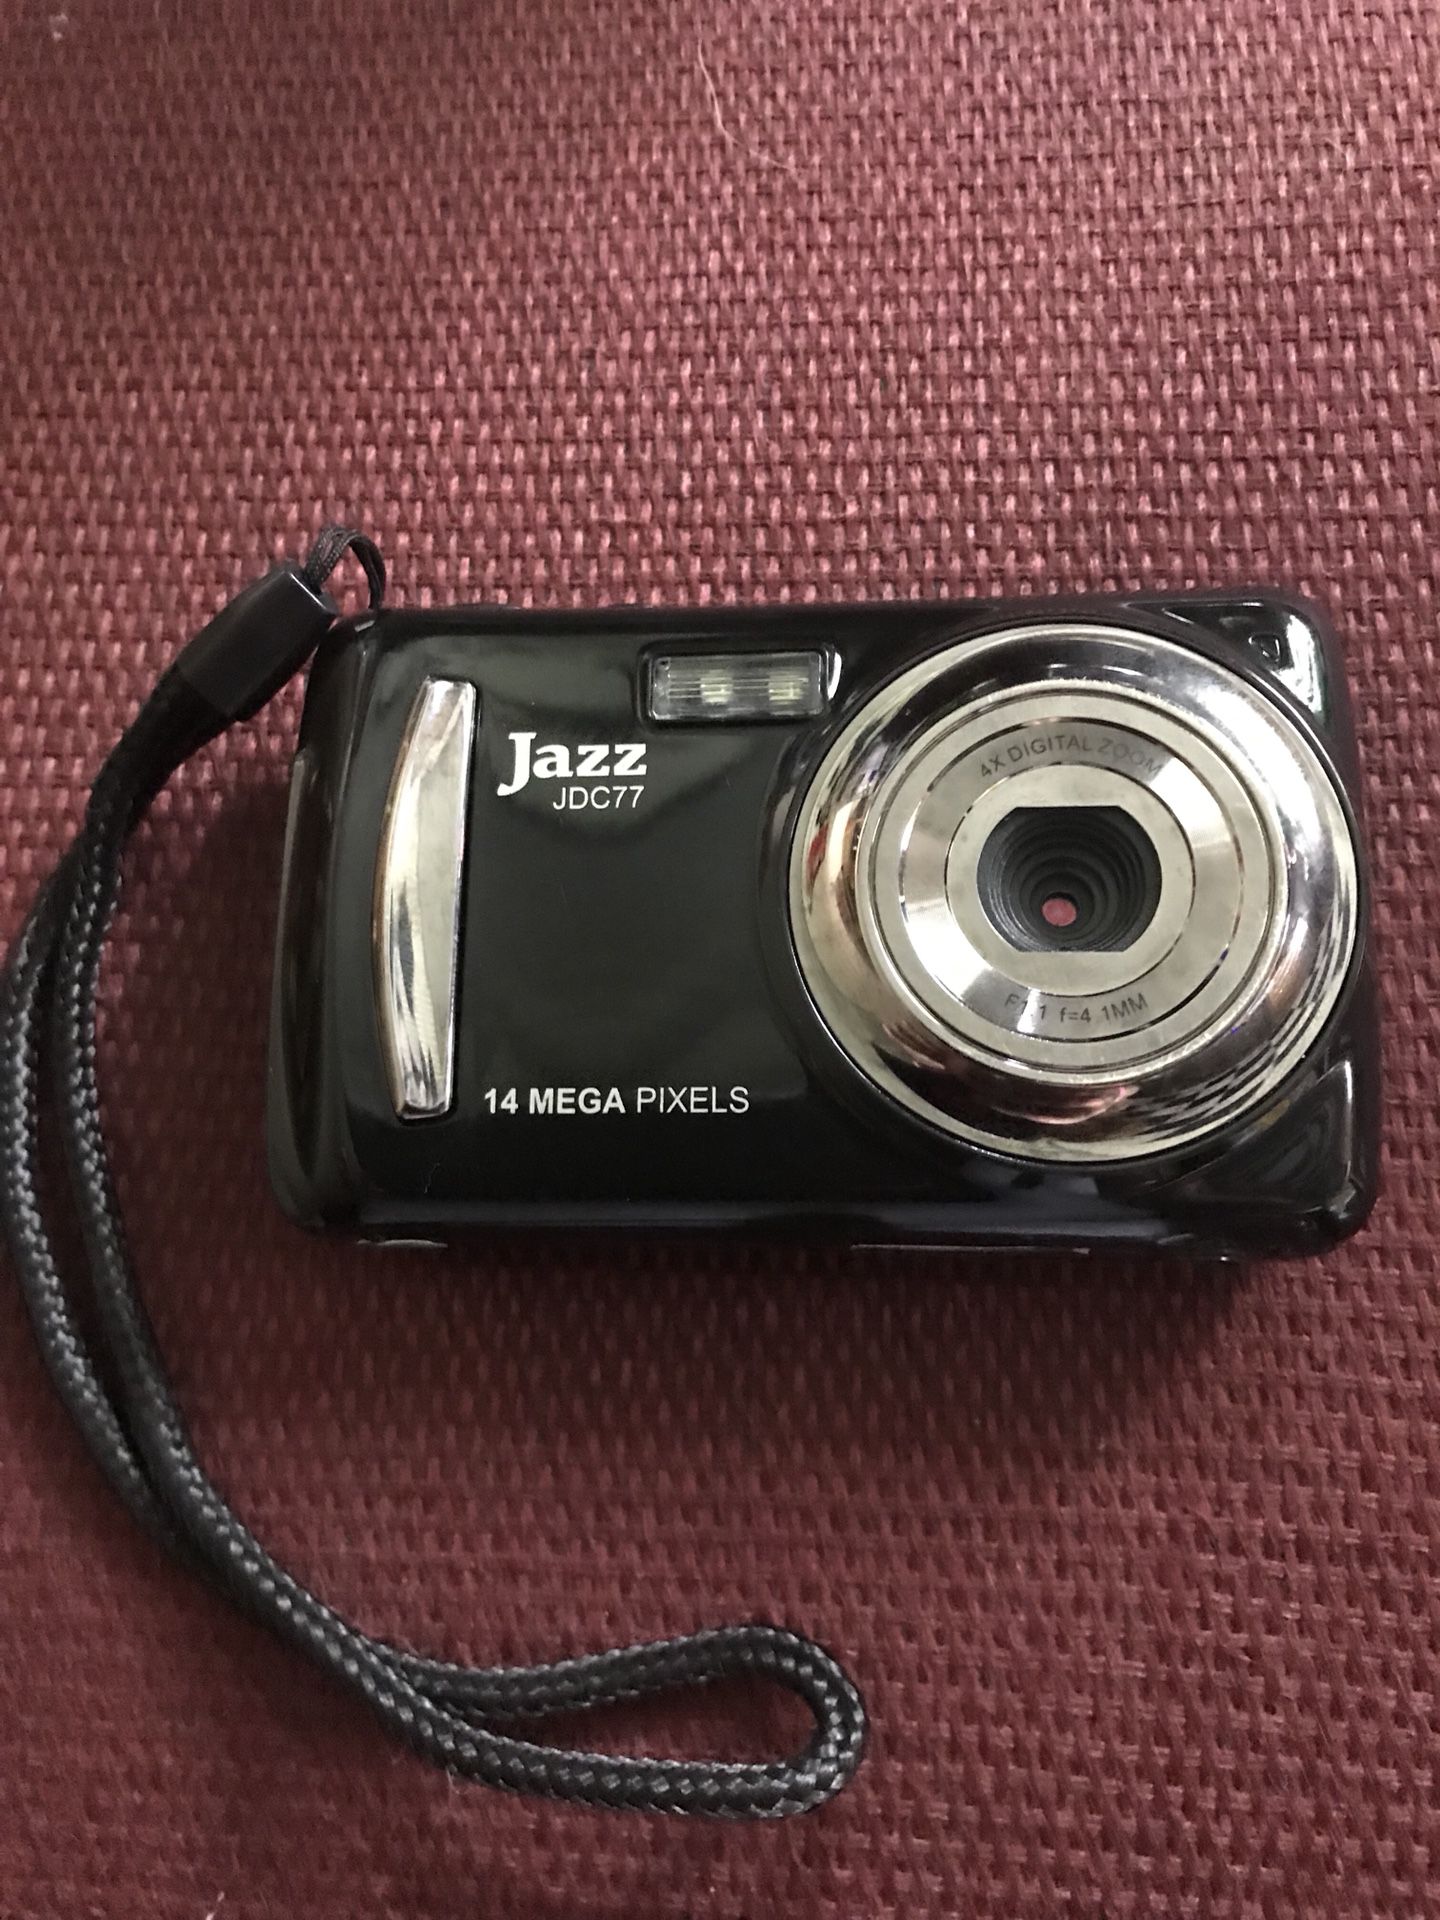 Jazz jdc digital camera